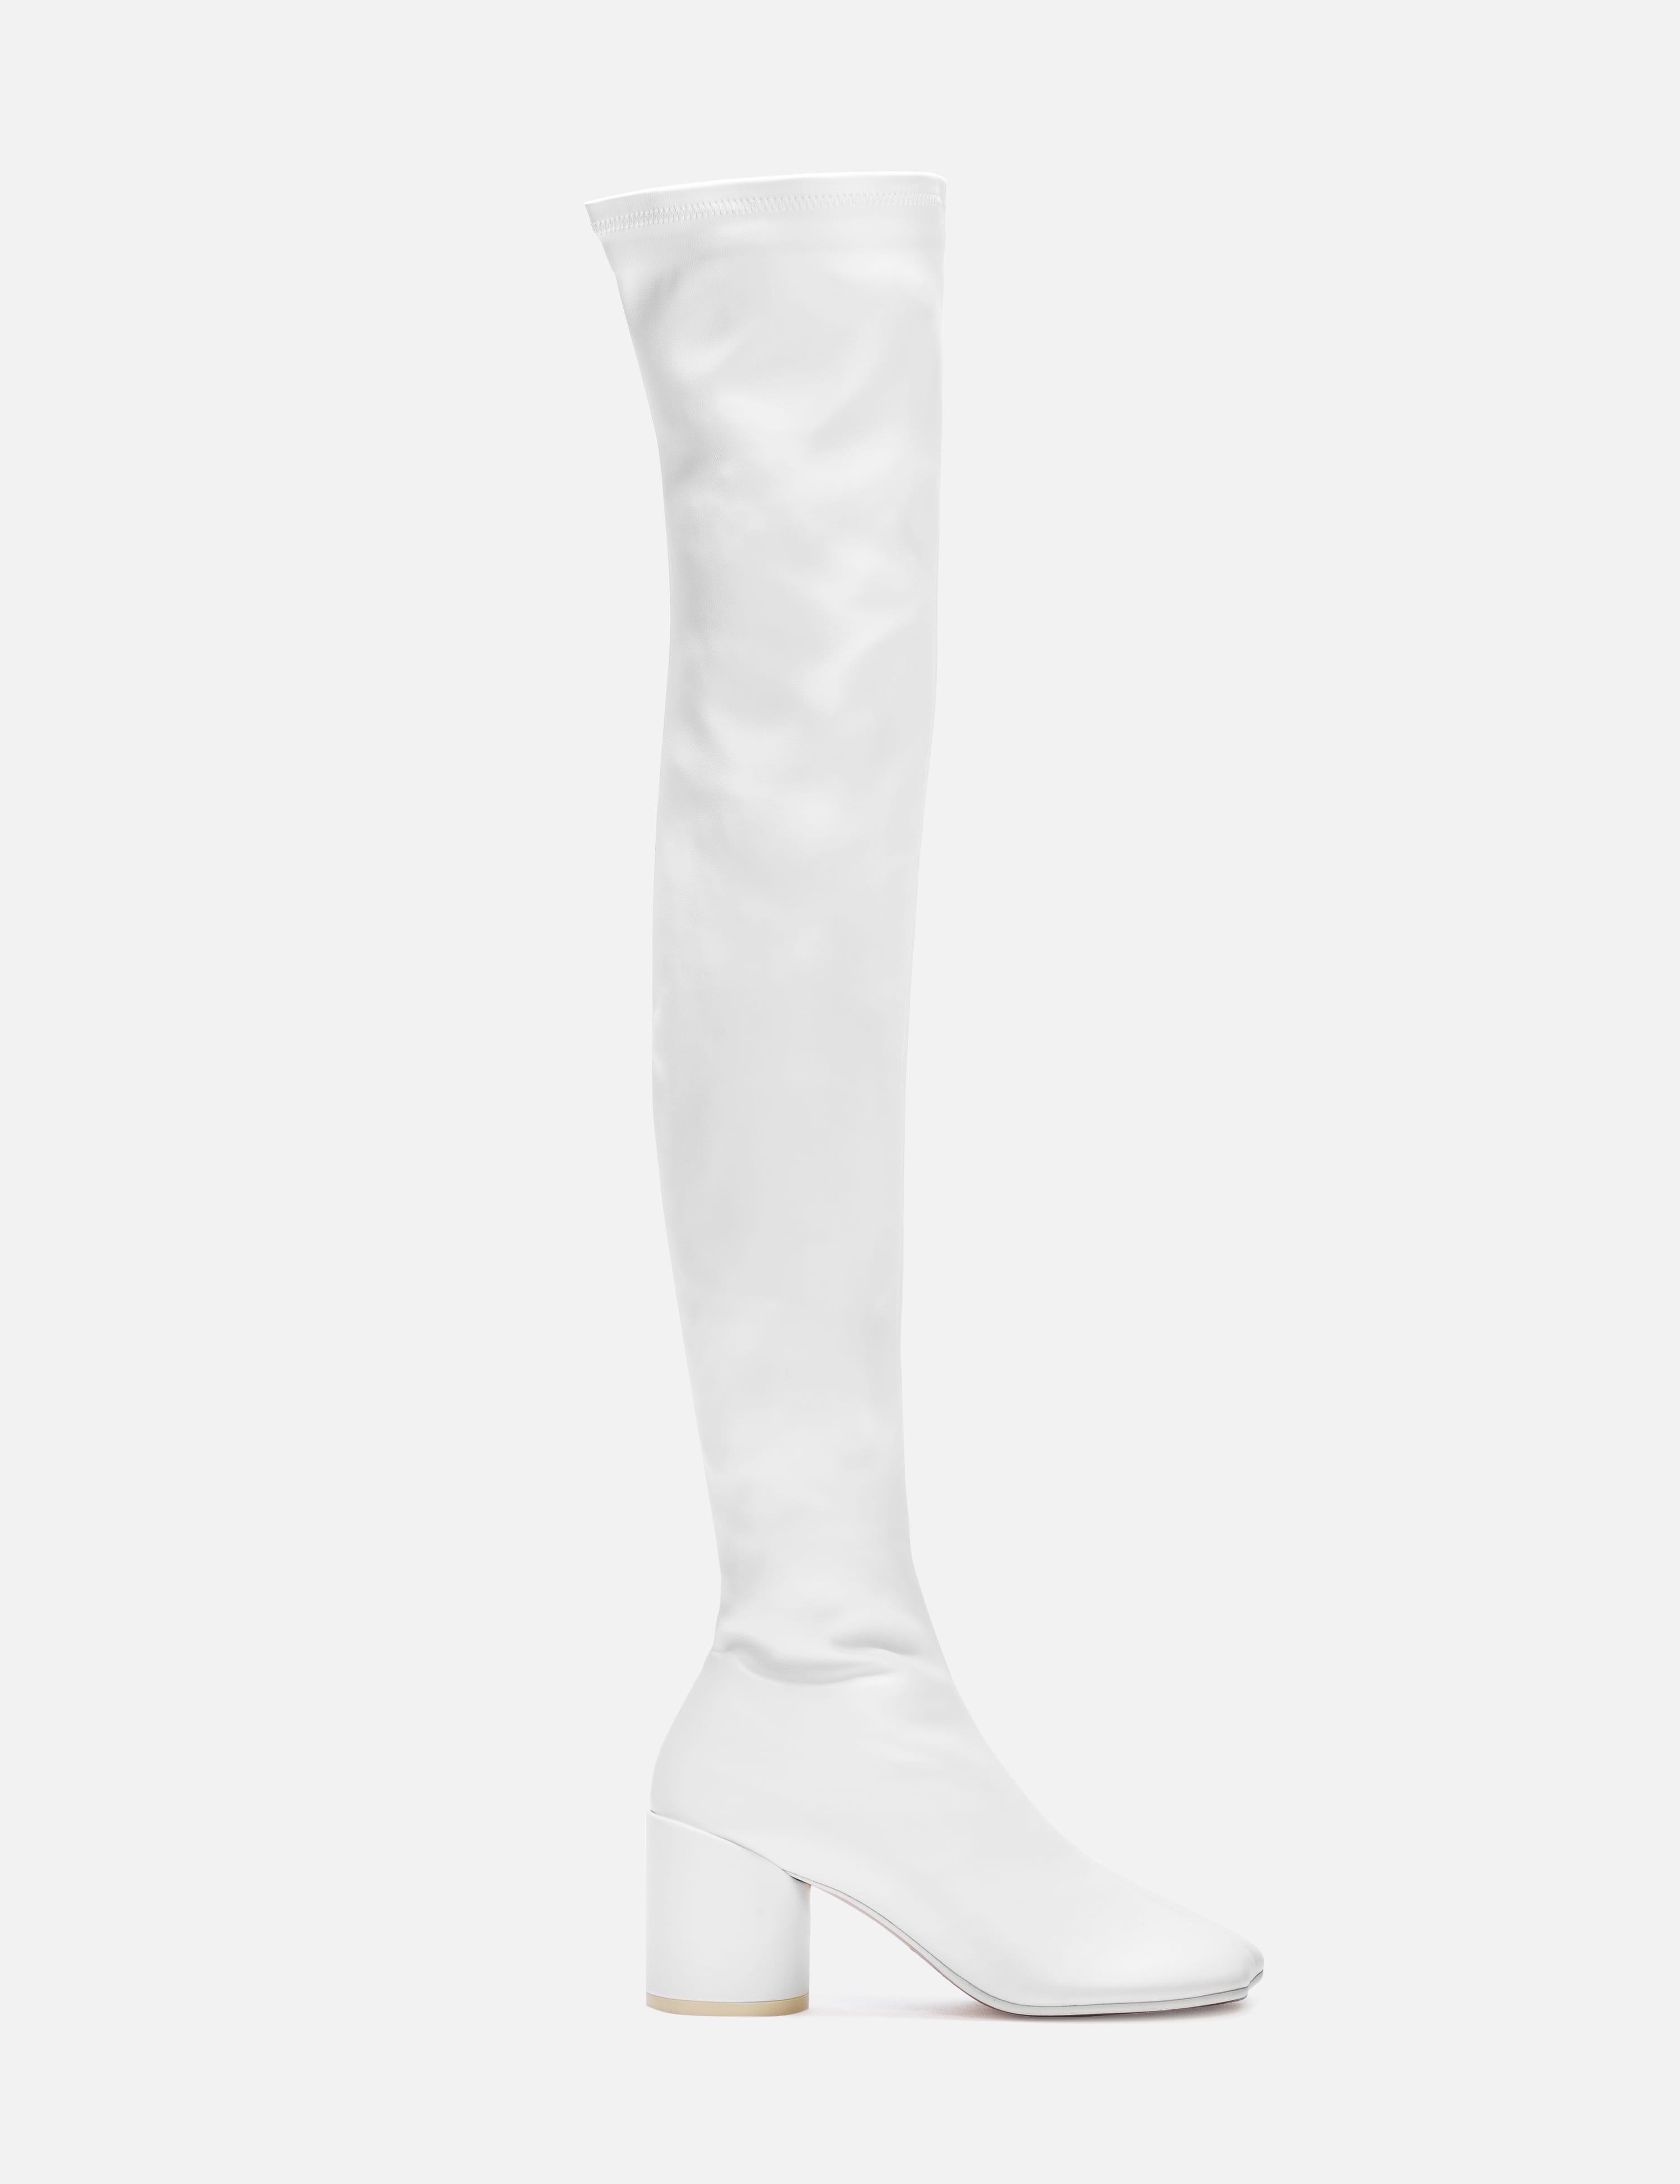 MM6 Maison Margiela - Anatomic Thigh High Boots | HBX - Globally